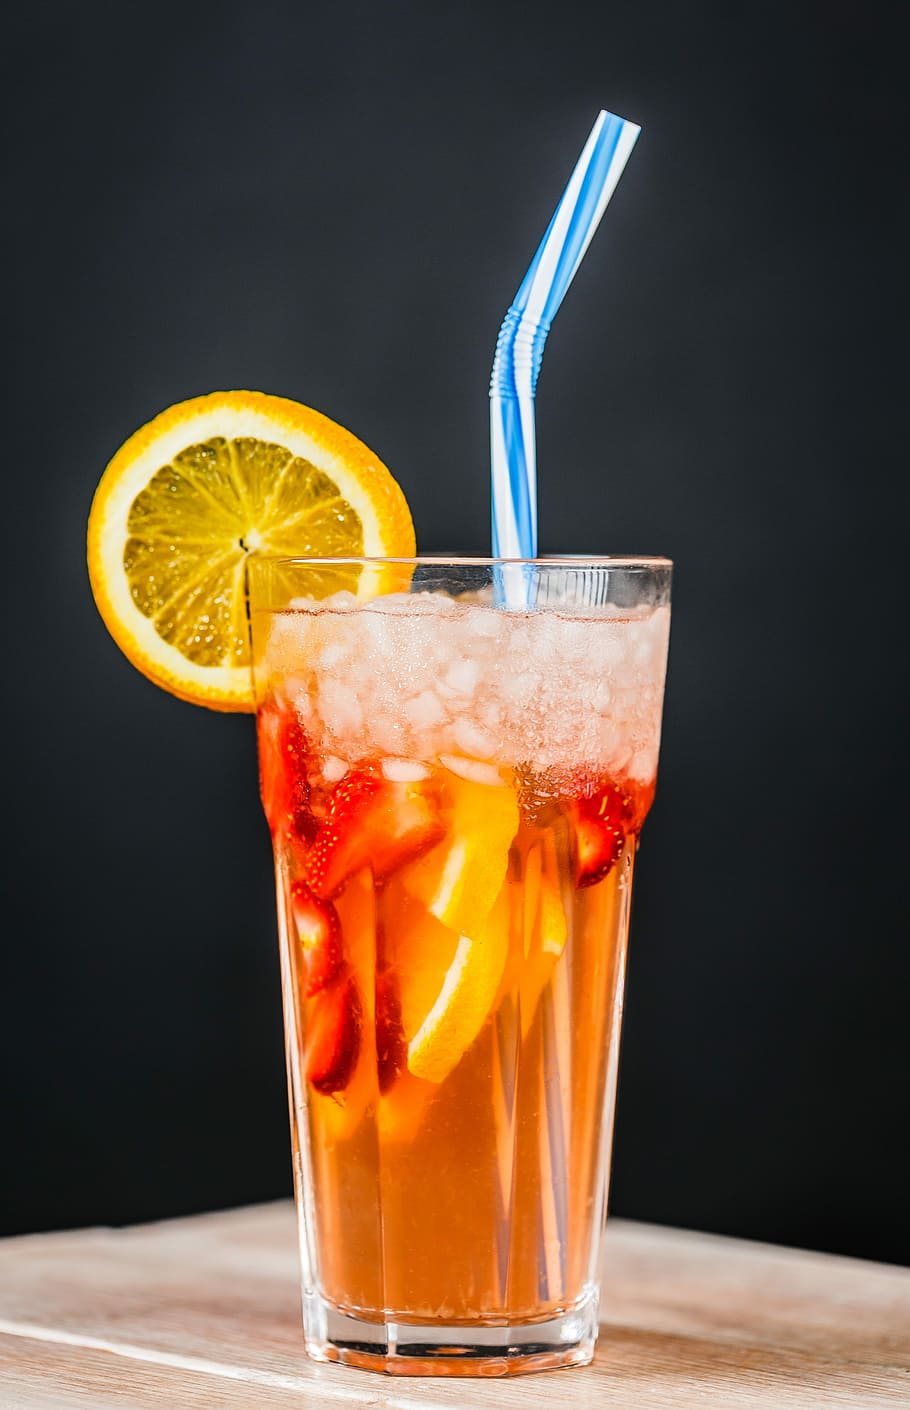 naranja, jugo de fresa, limón, vidrio, bebida, fríamente, salud, cóctel, aire, vaso de vidrio